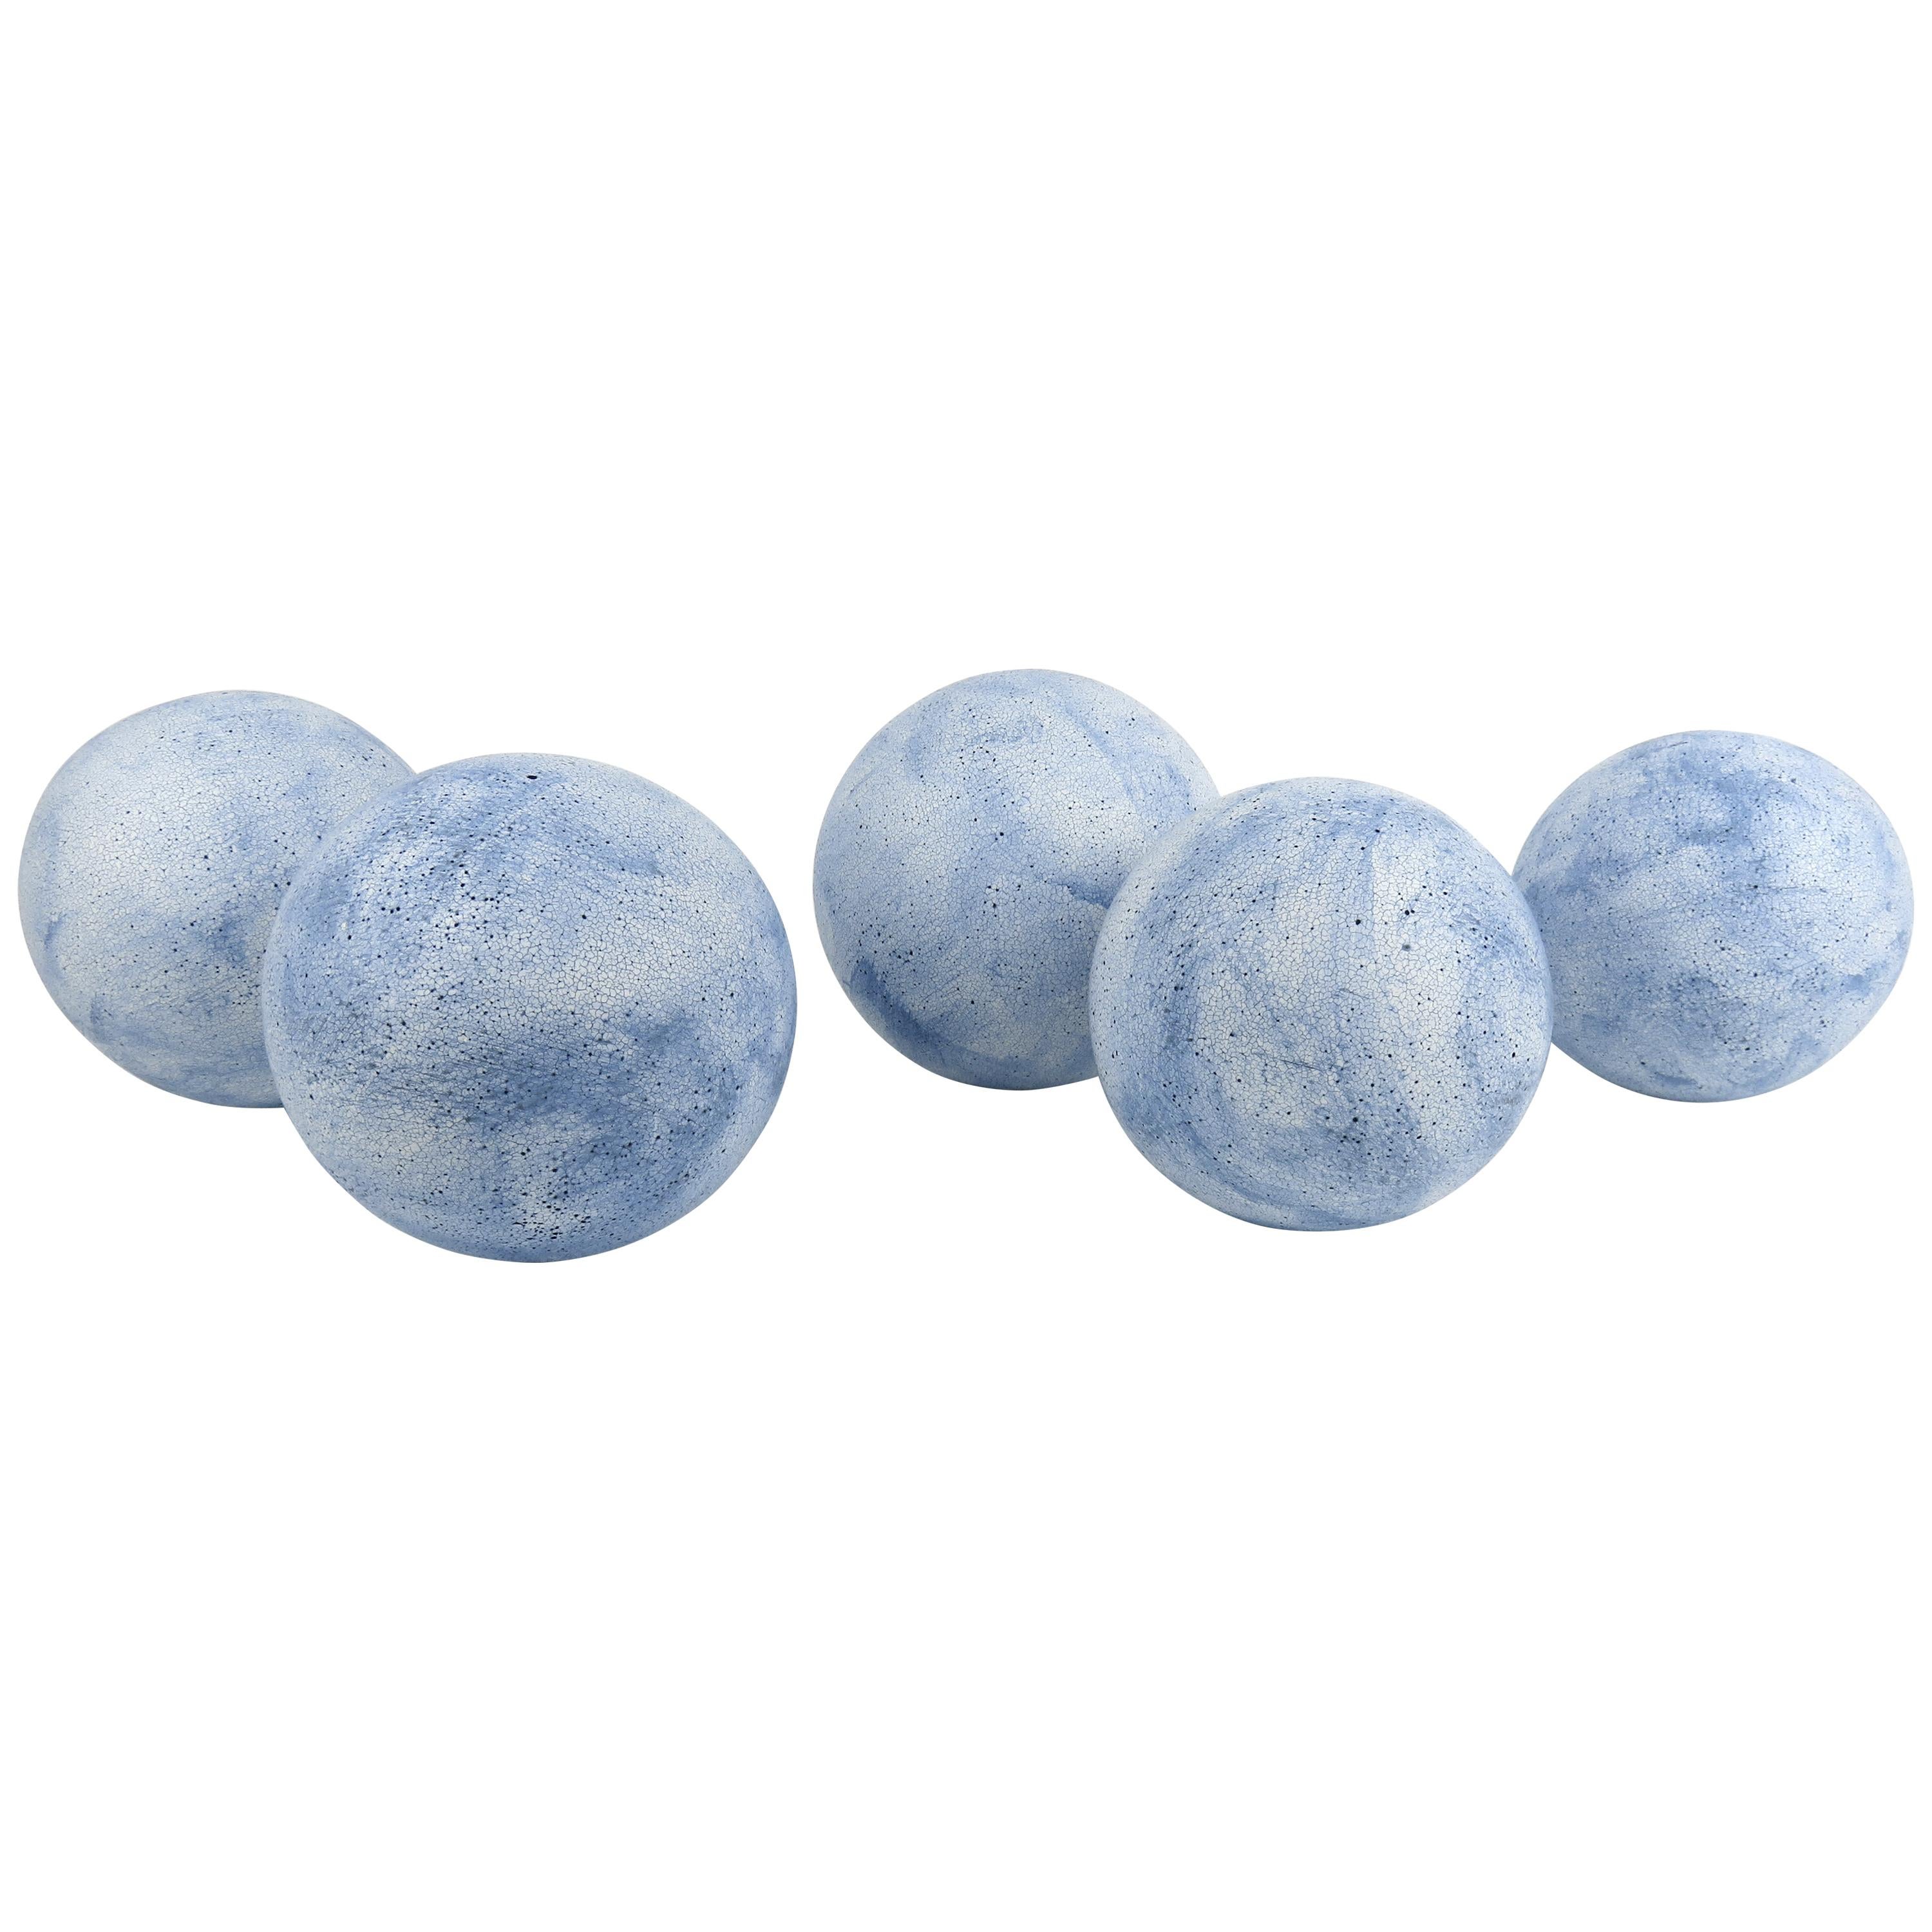 Handgefertigte Himmelblaue Kugeln aus Keramik, Terra Sigilatta und kobaltblauer Oxide